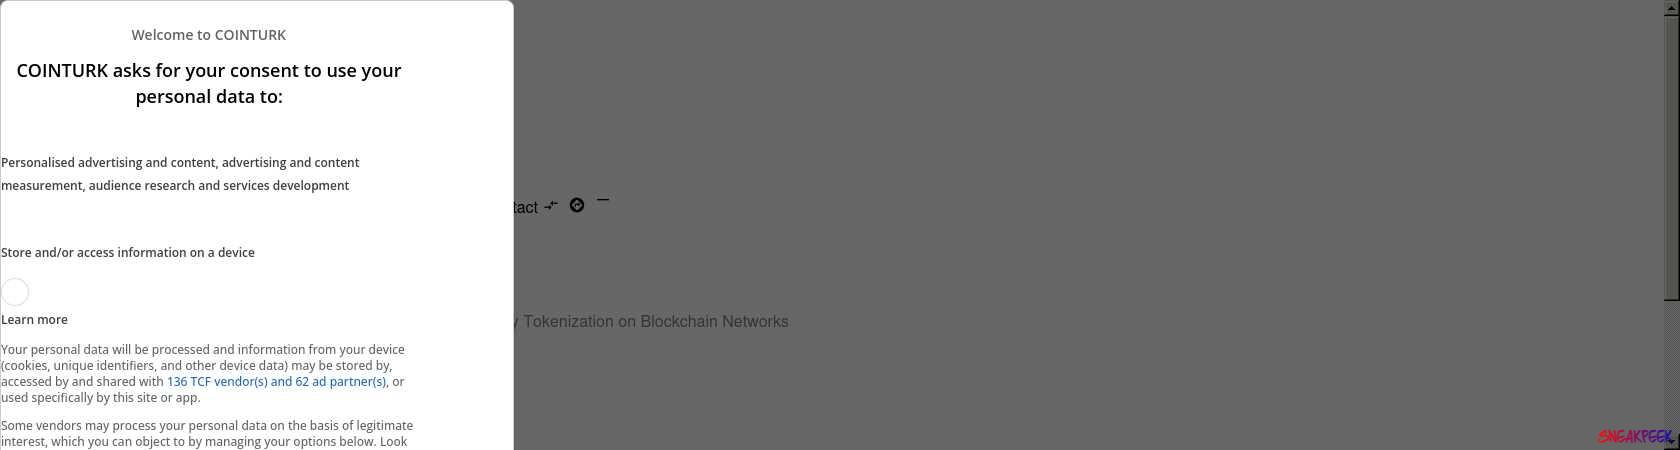 Read the full Article:  ⭲ BlackRock Leads in Treasury Tokenization on Blockchain Networks